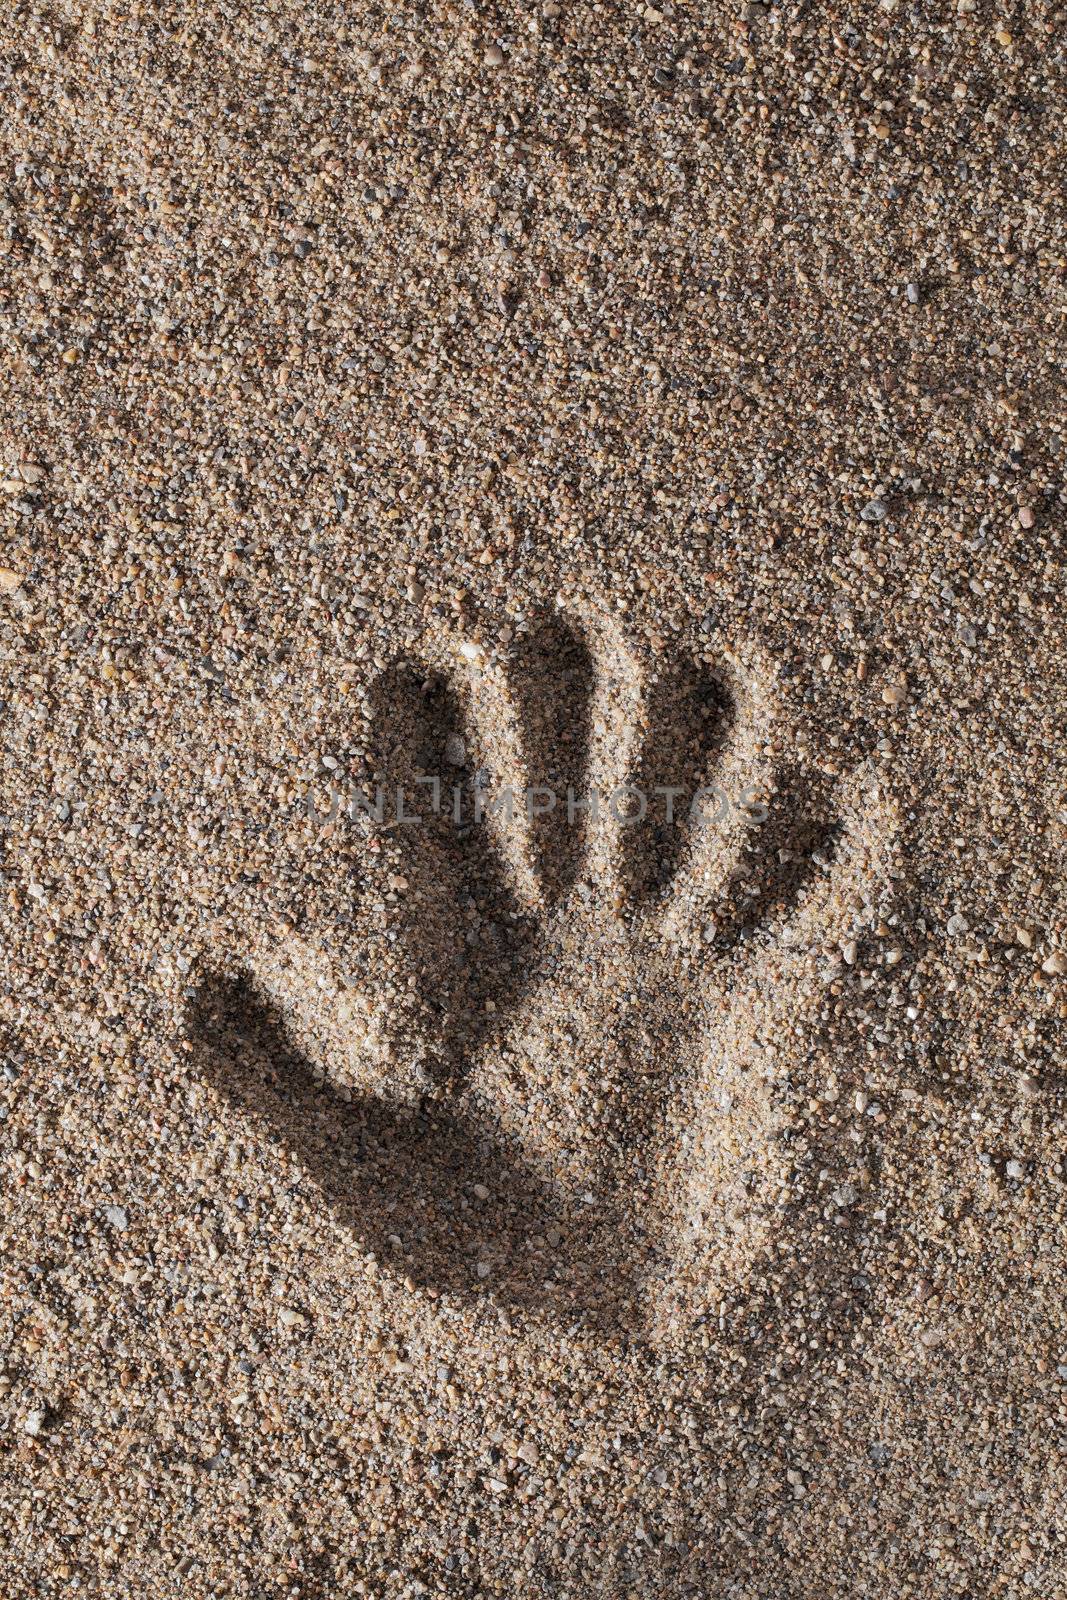 Hand print in coarse sand.